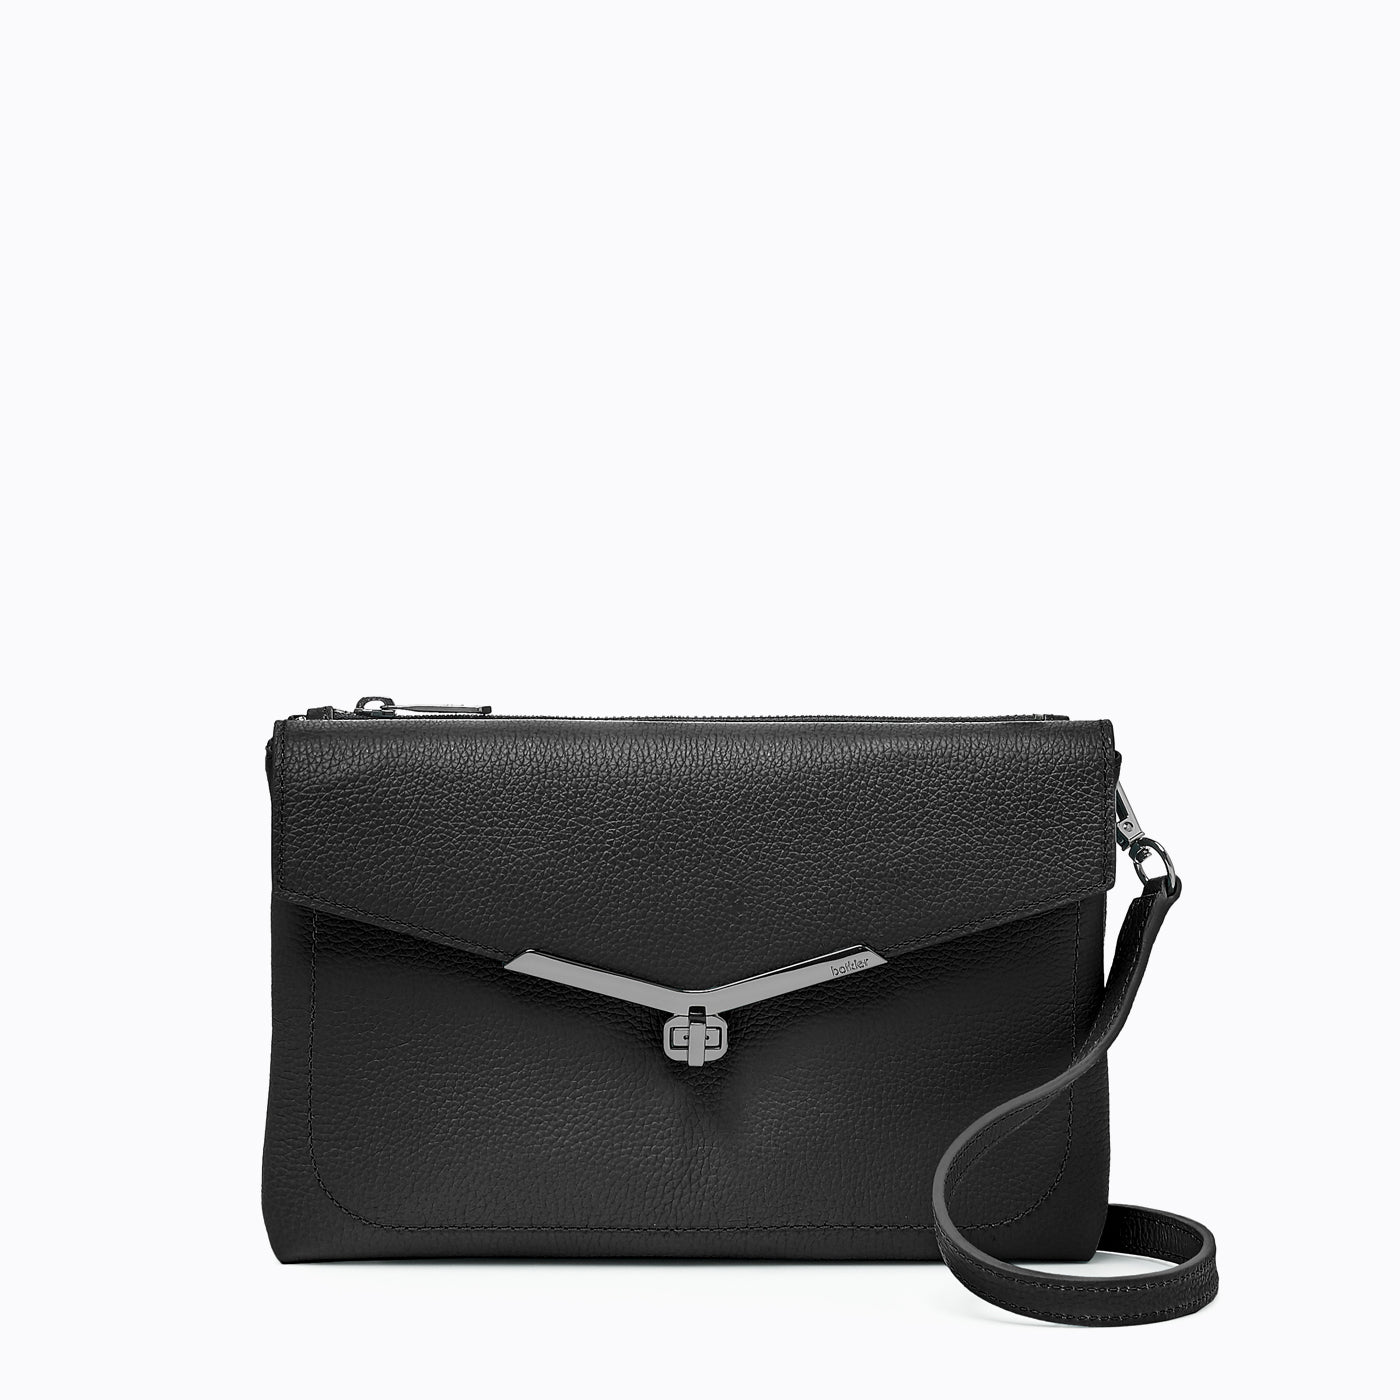 Small black bag - new women bags